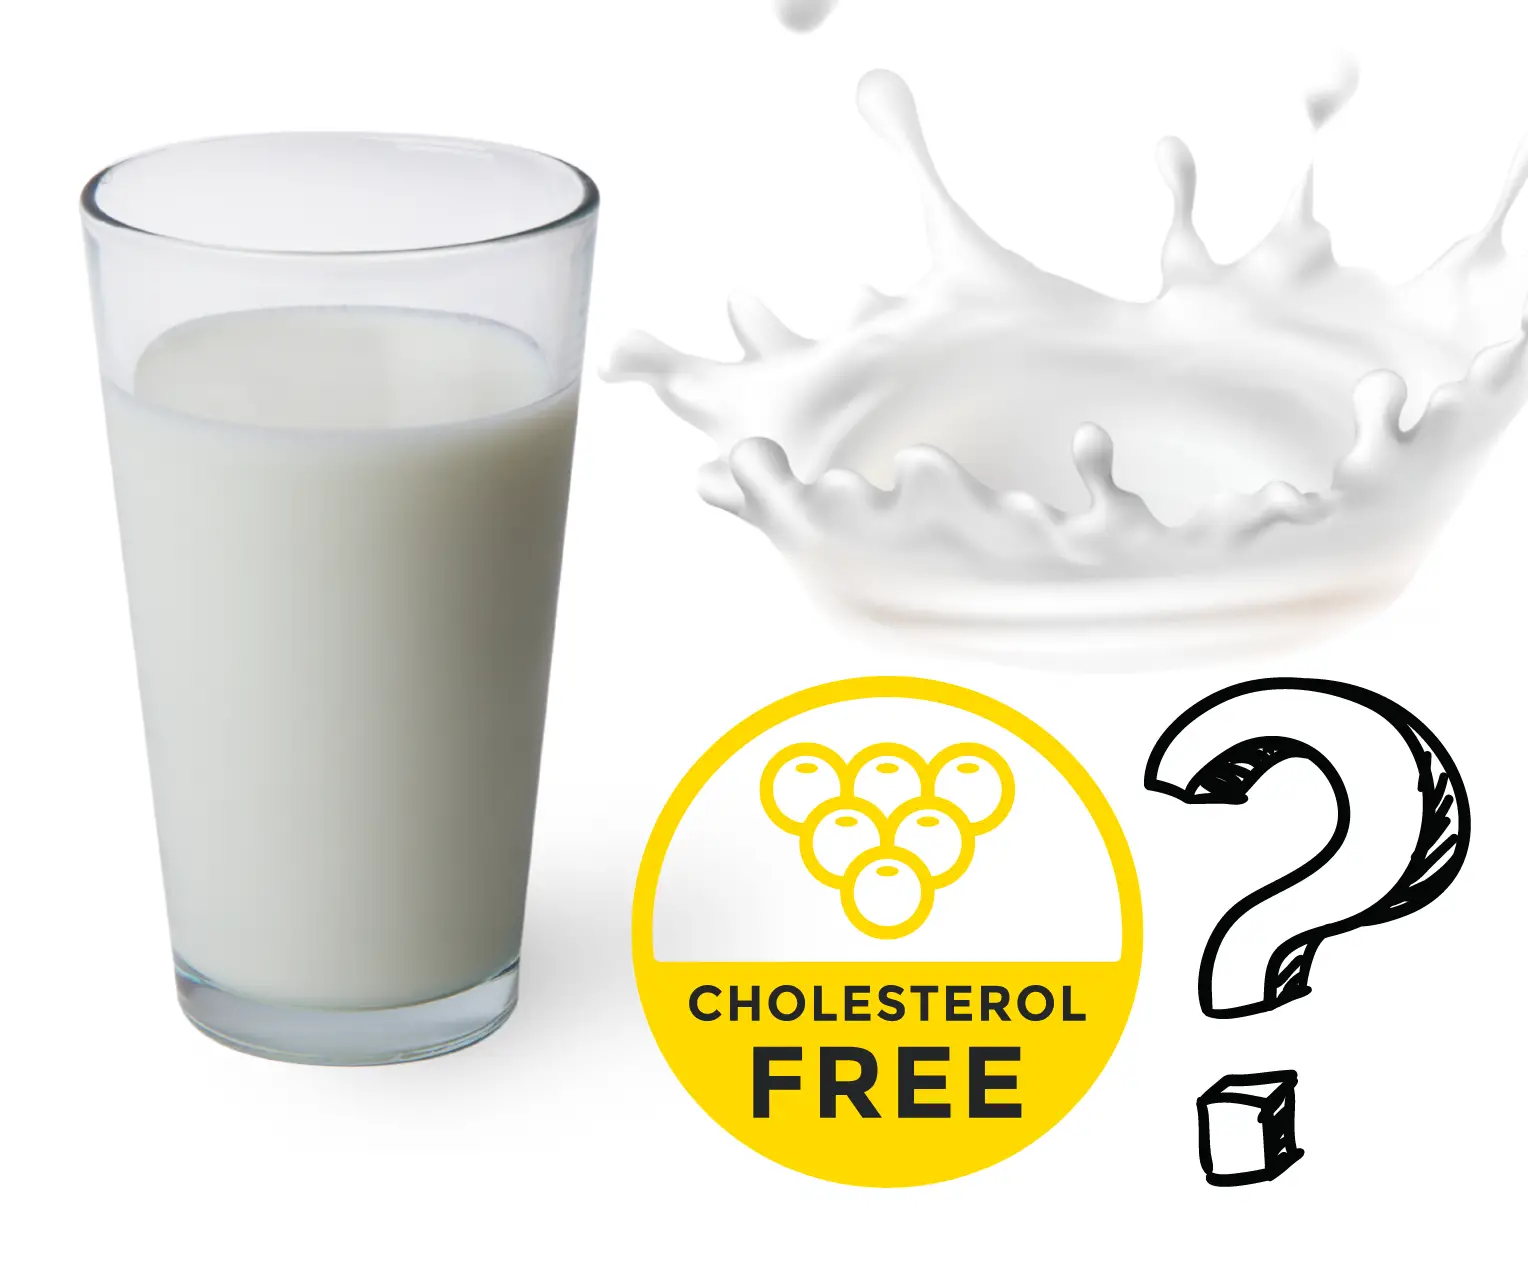 Is milk high in cholesterol?